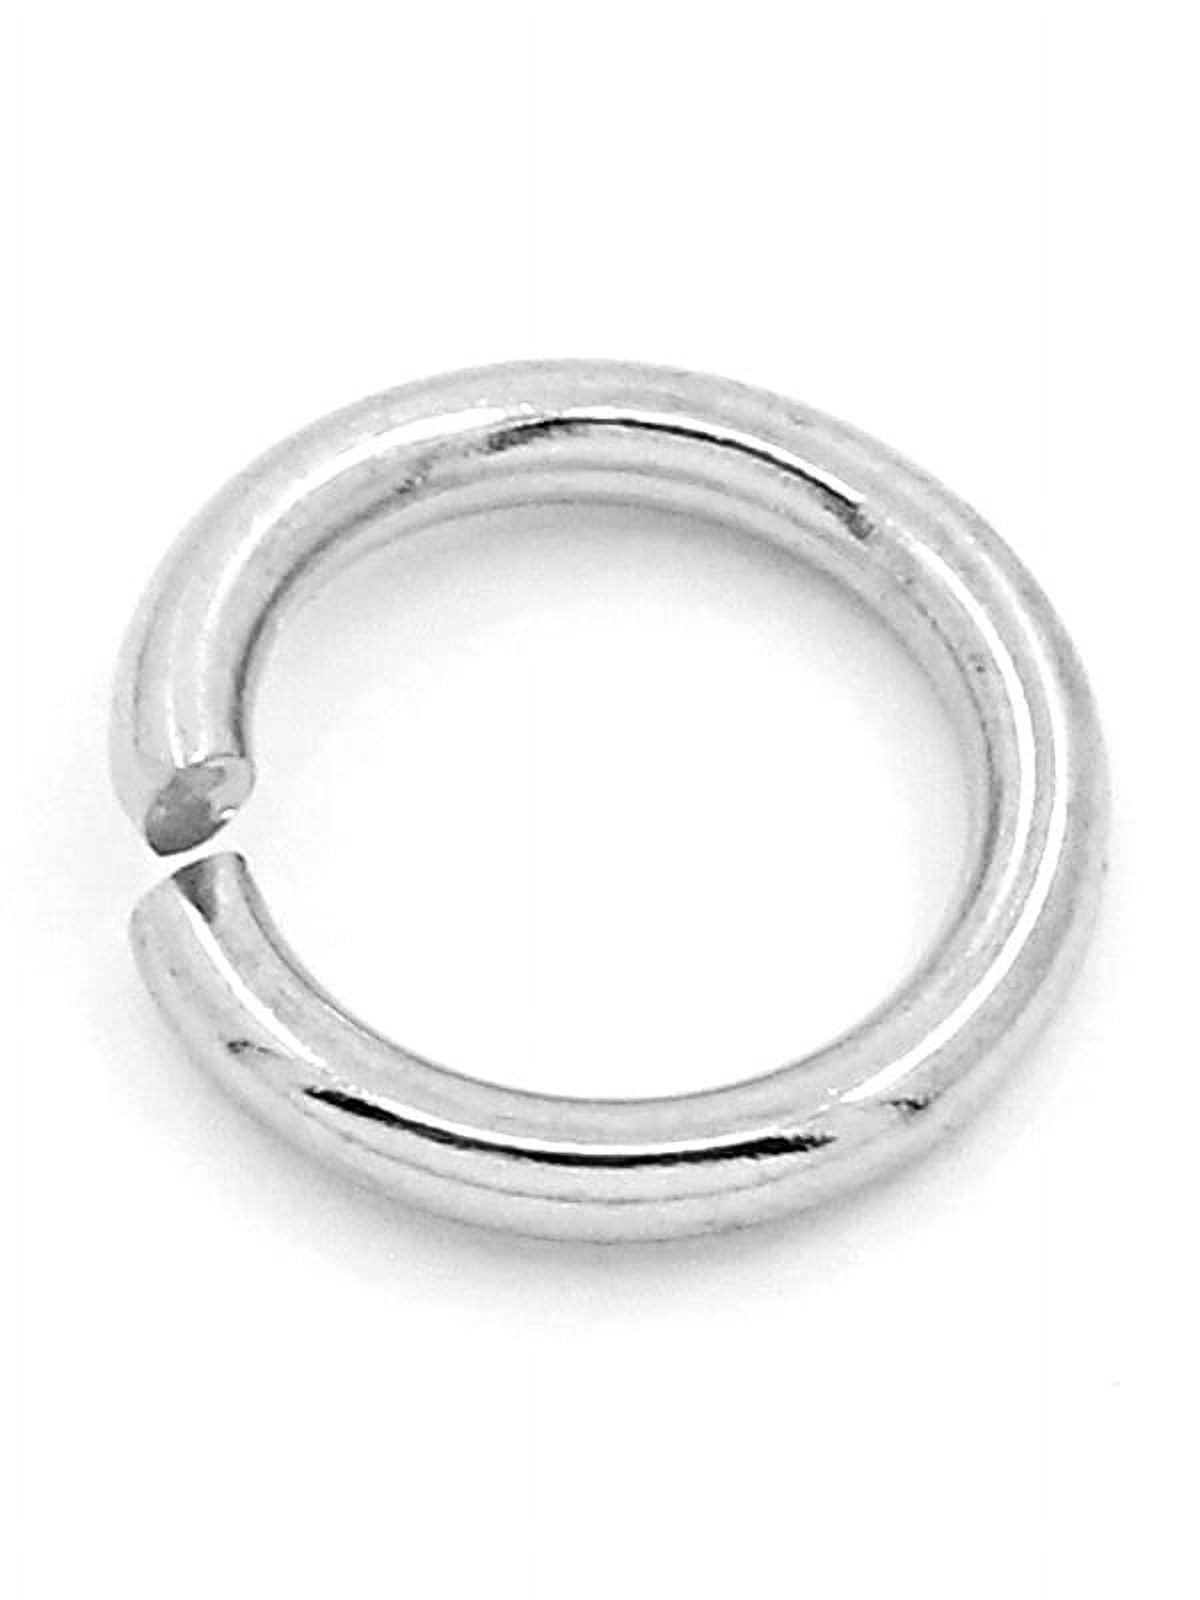 Mr. Pen- Open Jump Rings, Silver, 1014 Pcs, 6 Sizes Open Jump Rings for Jewelry Making, Silver Jump Rings and Lobster Clasps, Jewelry Jump Rings